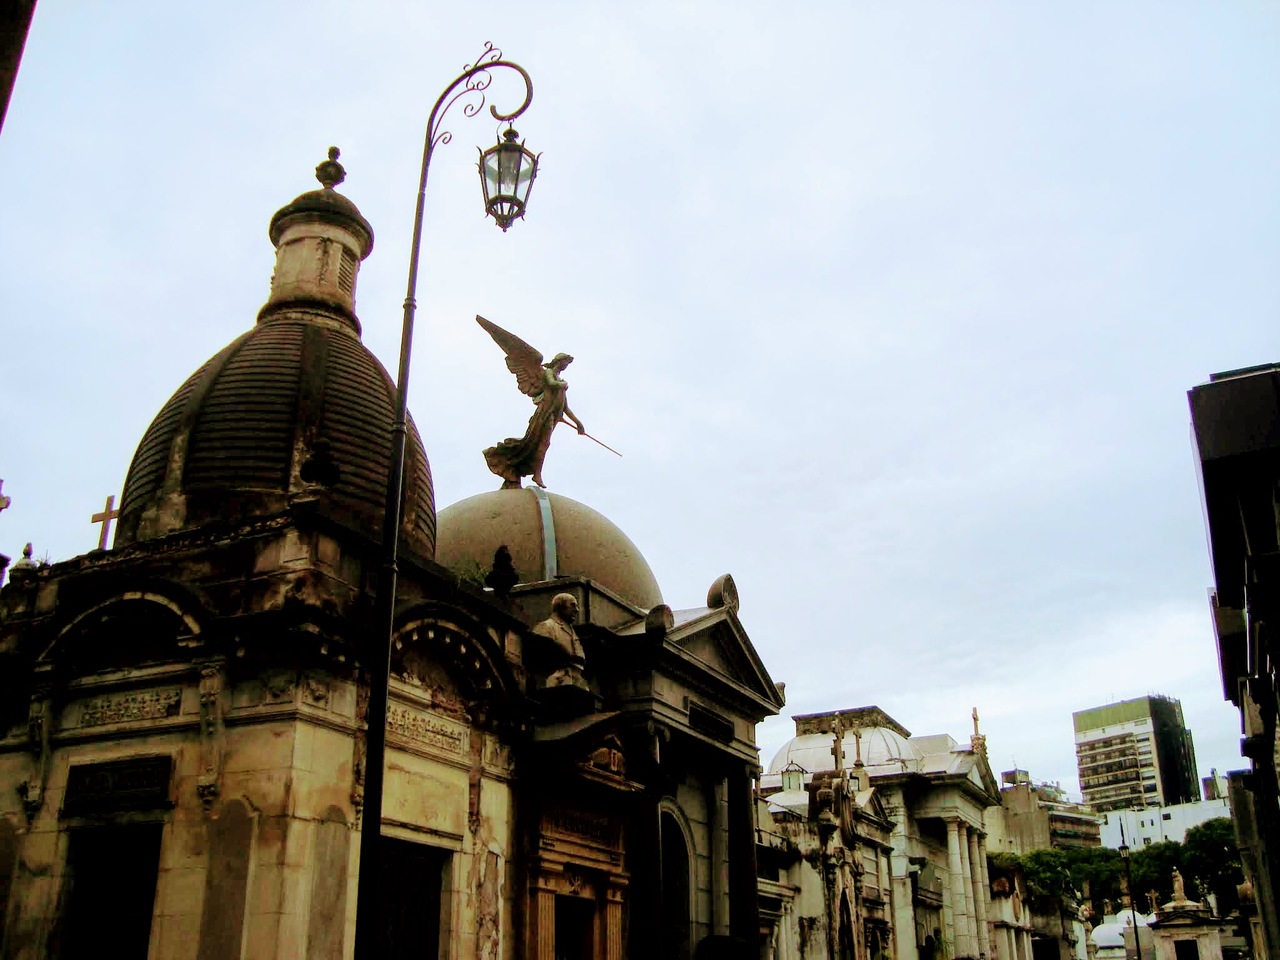 Recoleta - conheça os atrativos turísticos deste bairro de Buenos Aires